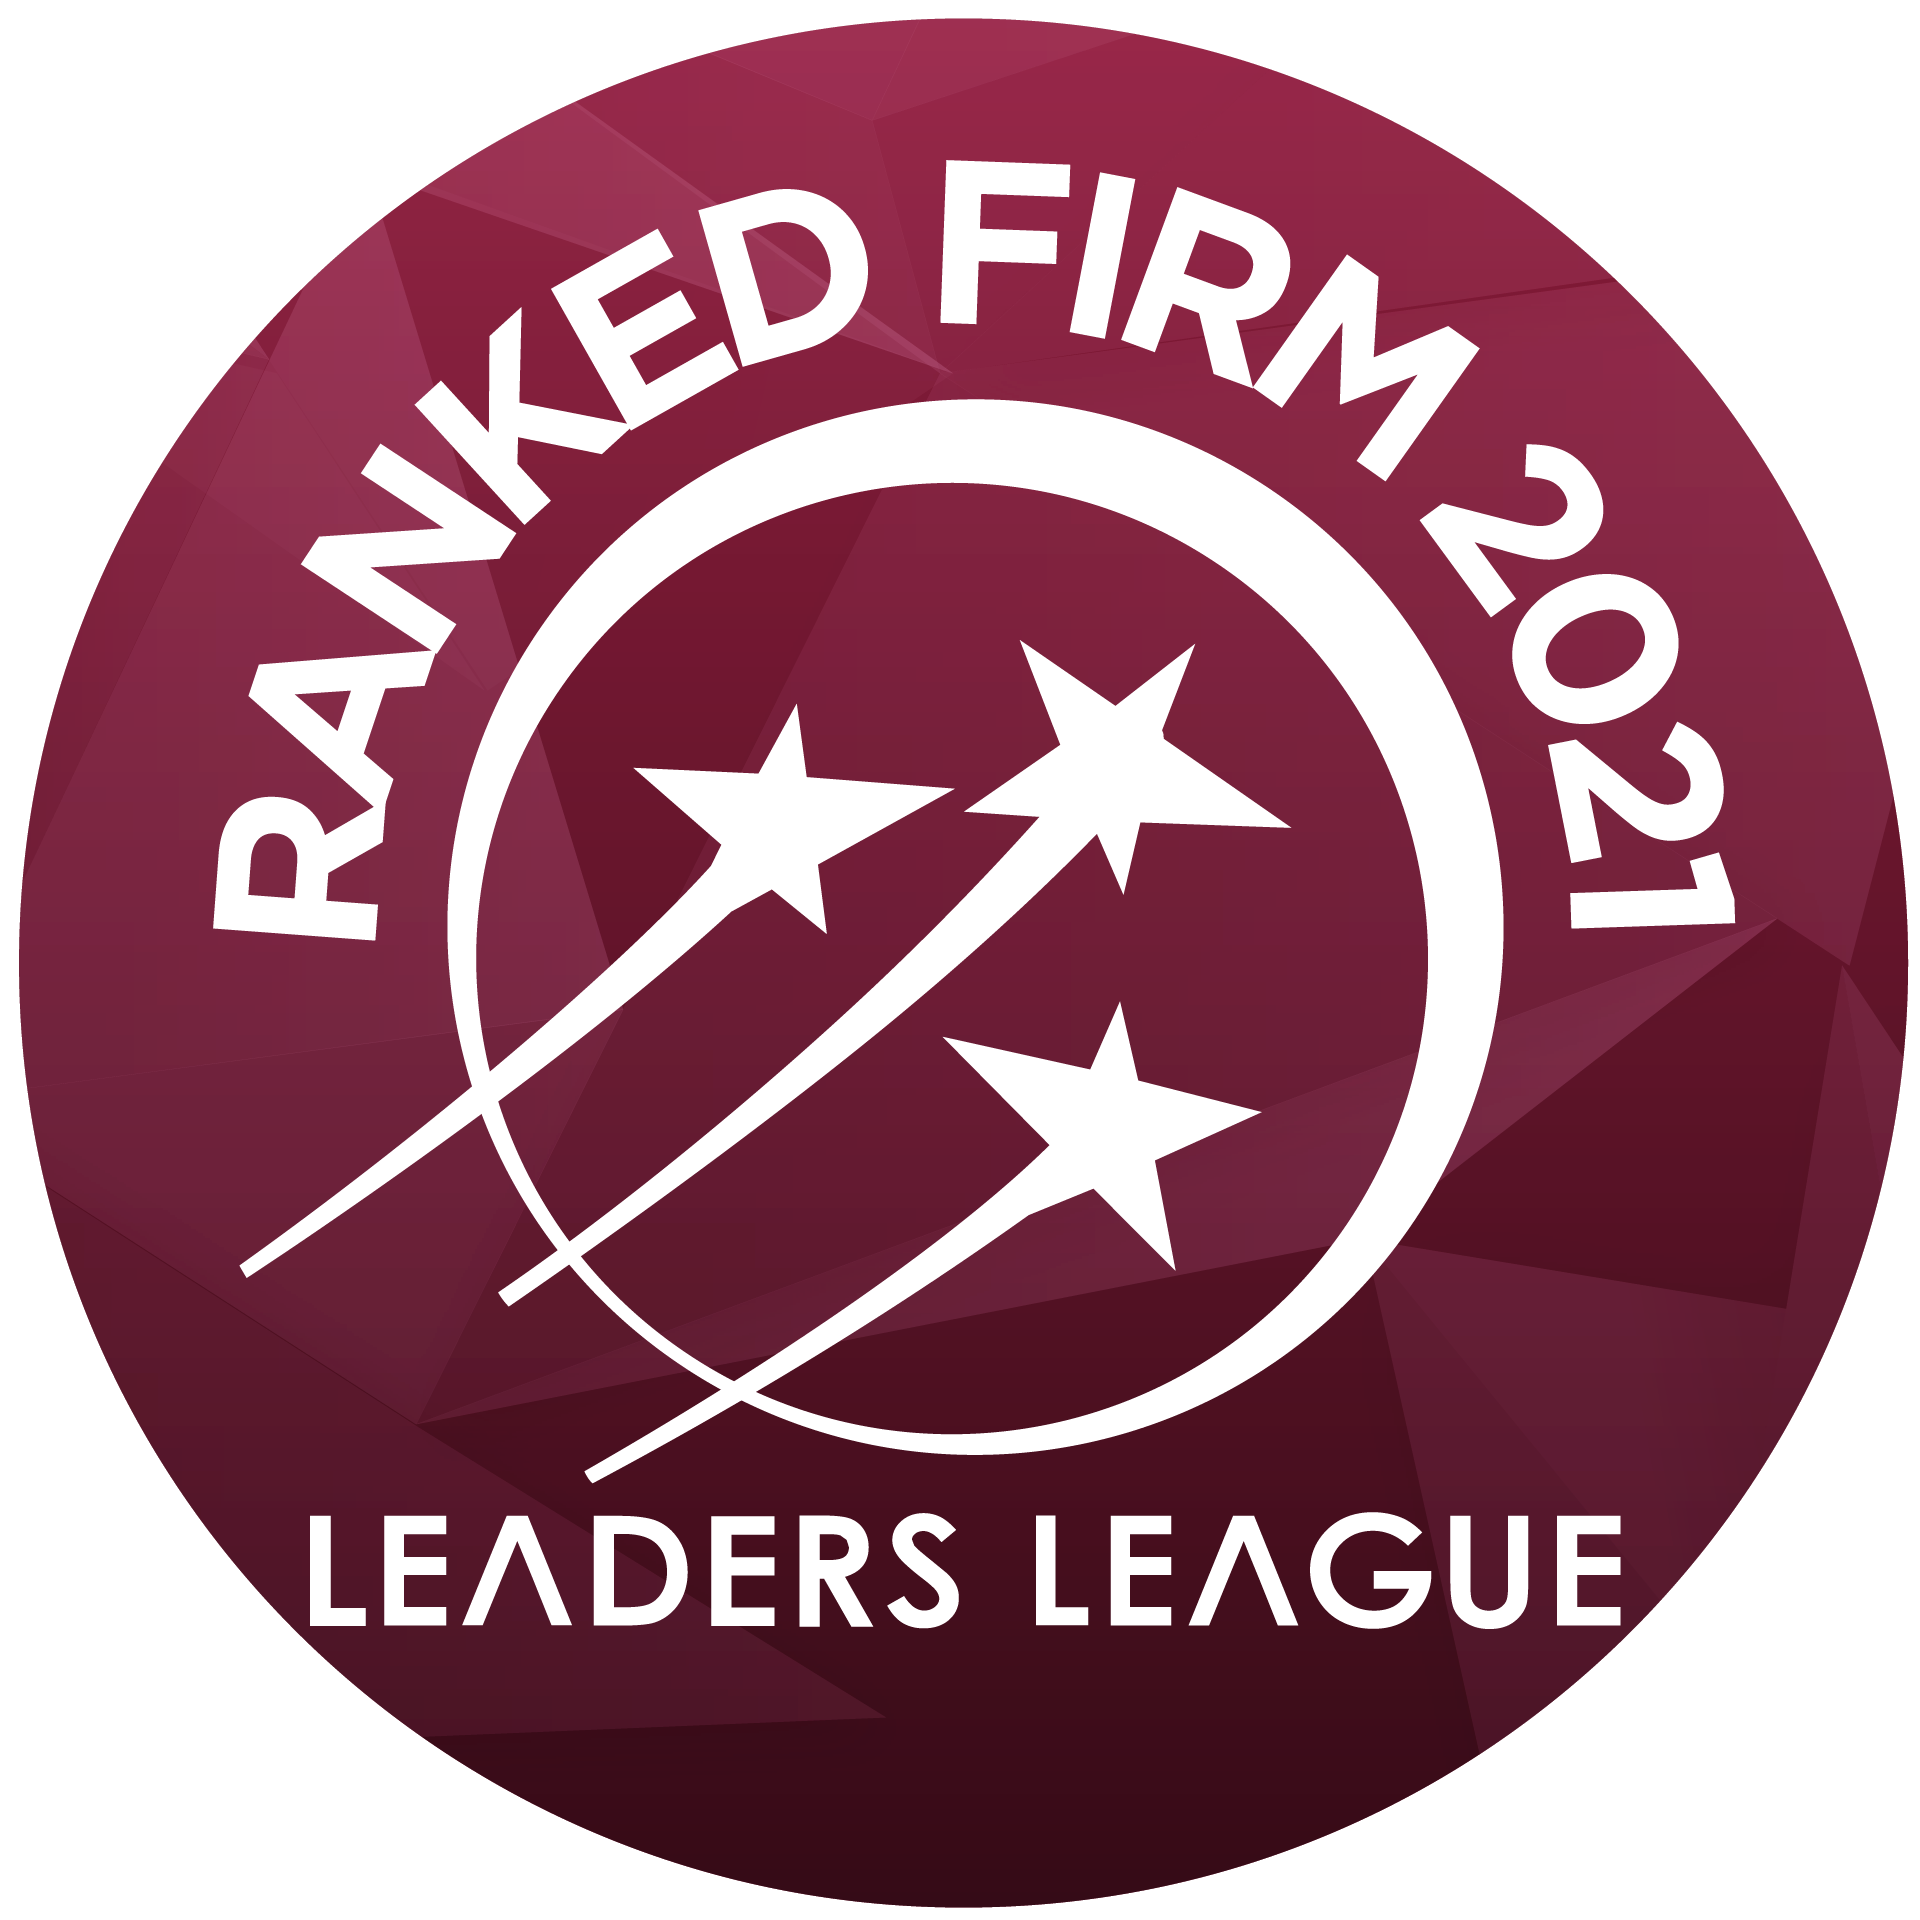 Leaders League - Markenrecht